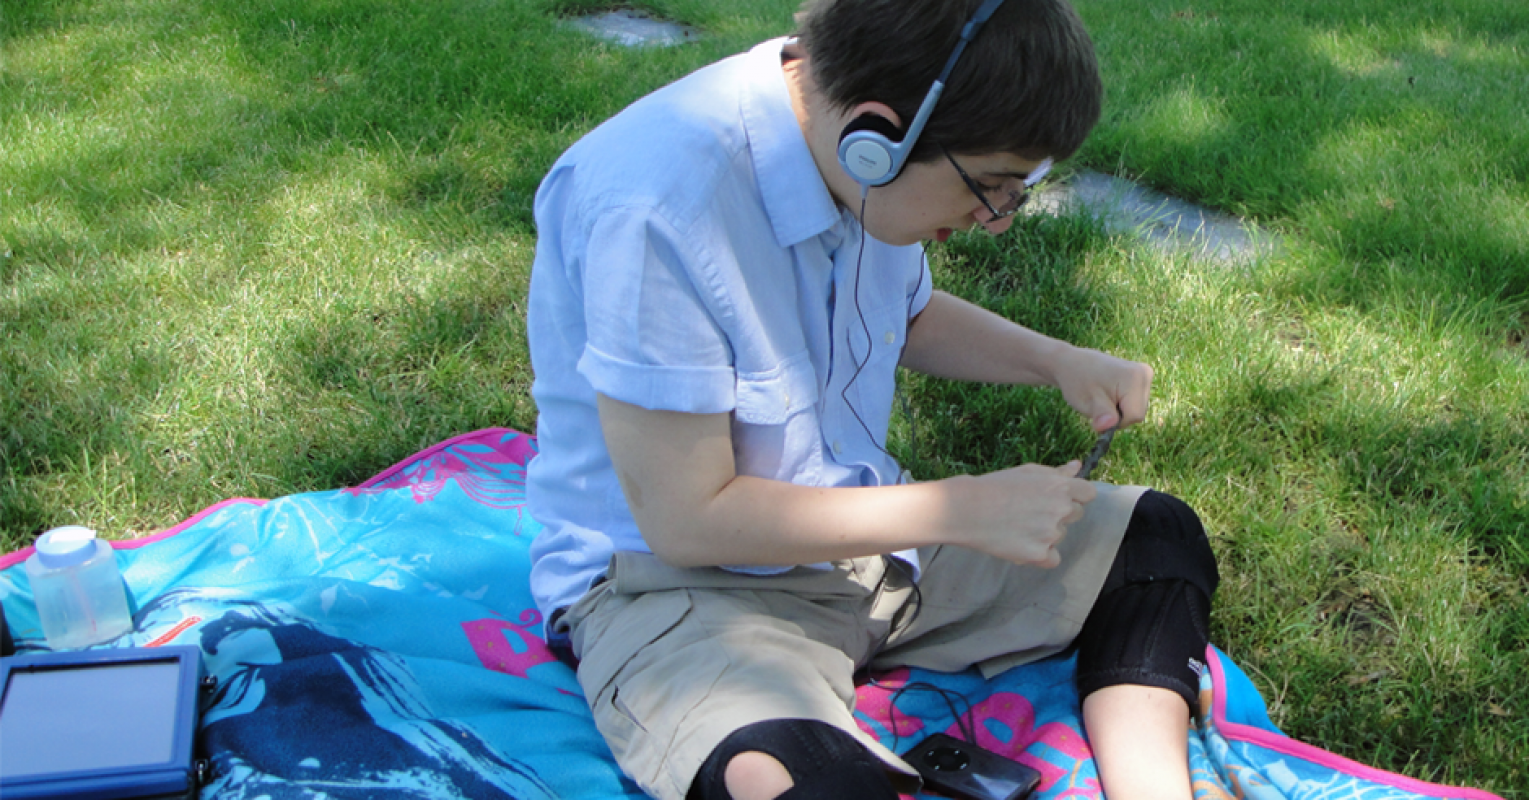 Boy in on grass field listening through headphones